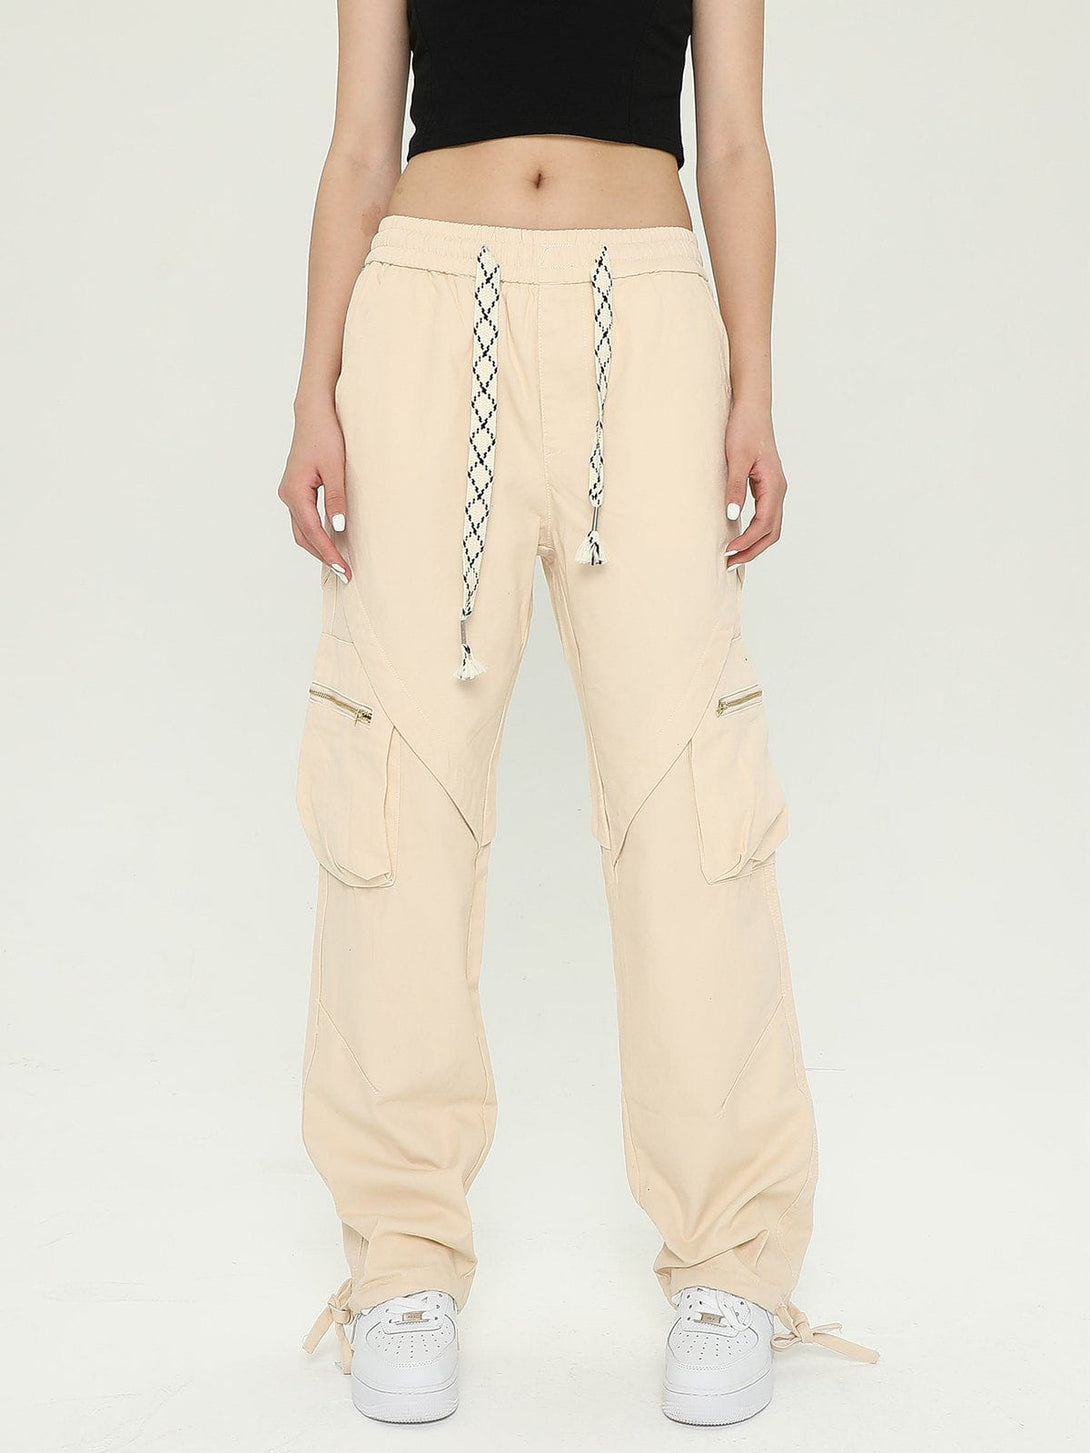 Majesda® - Washed Minimalist Multi-Pocket Cargo Pants outfit ideas streetwear fashion